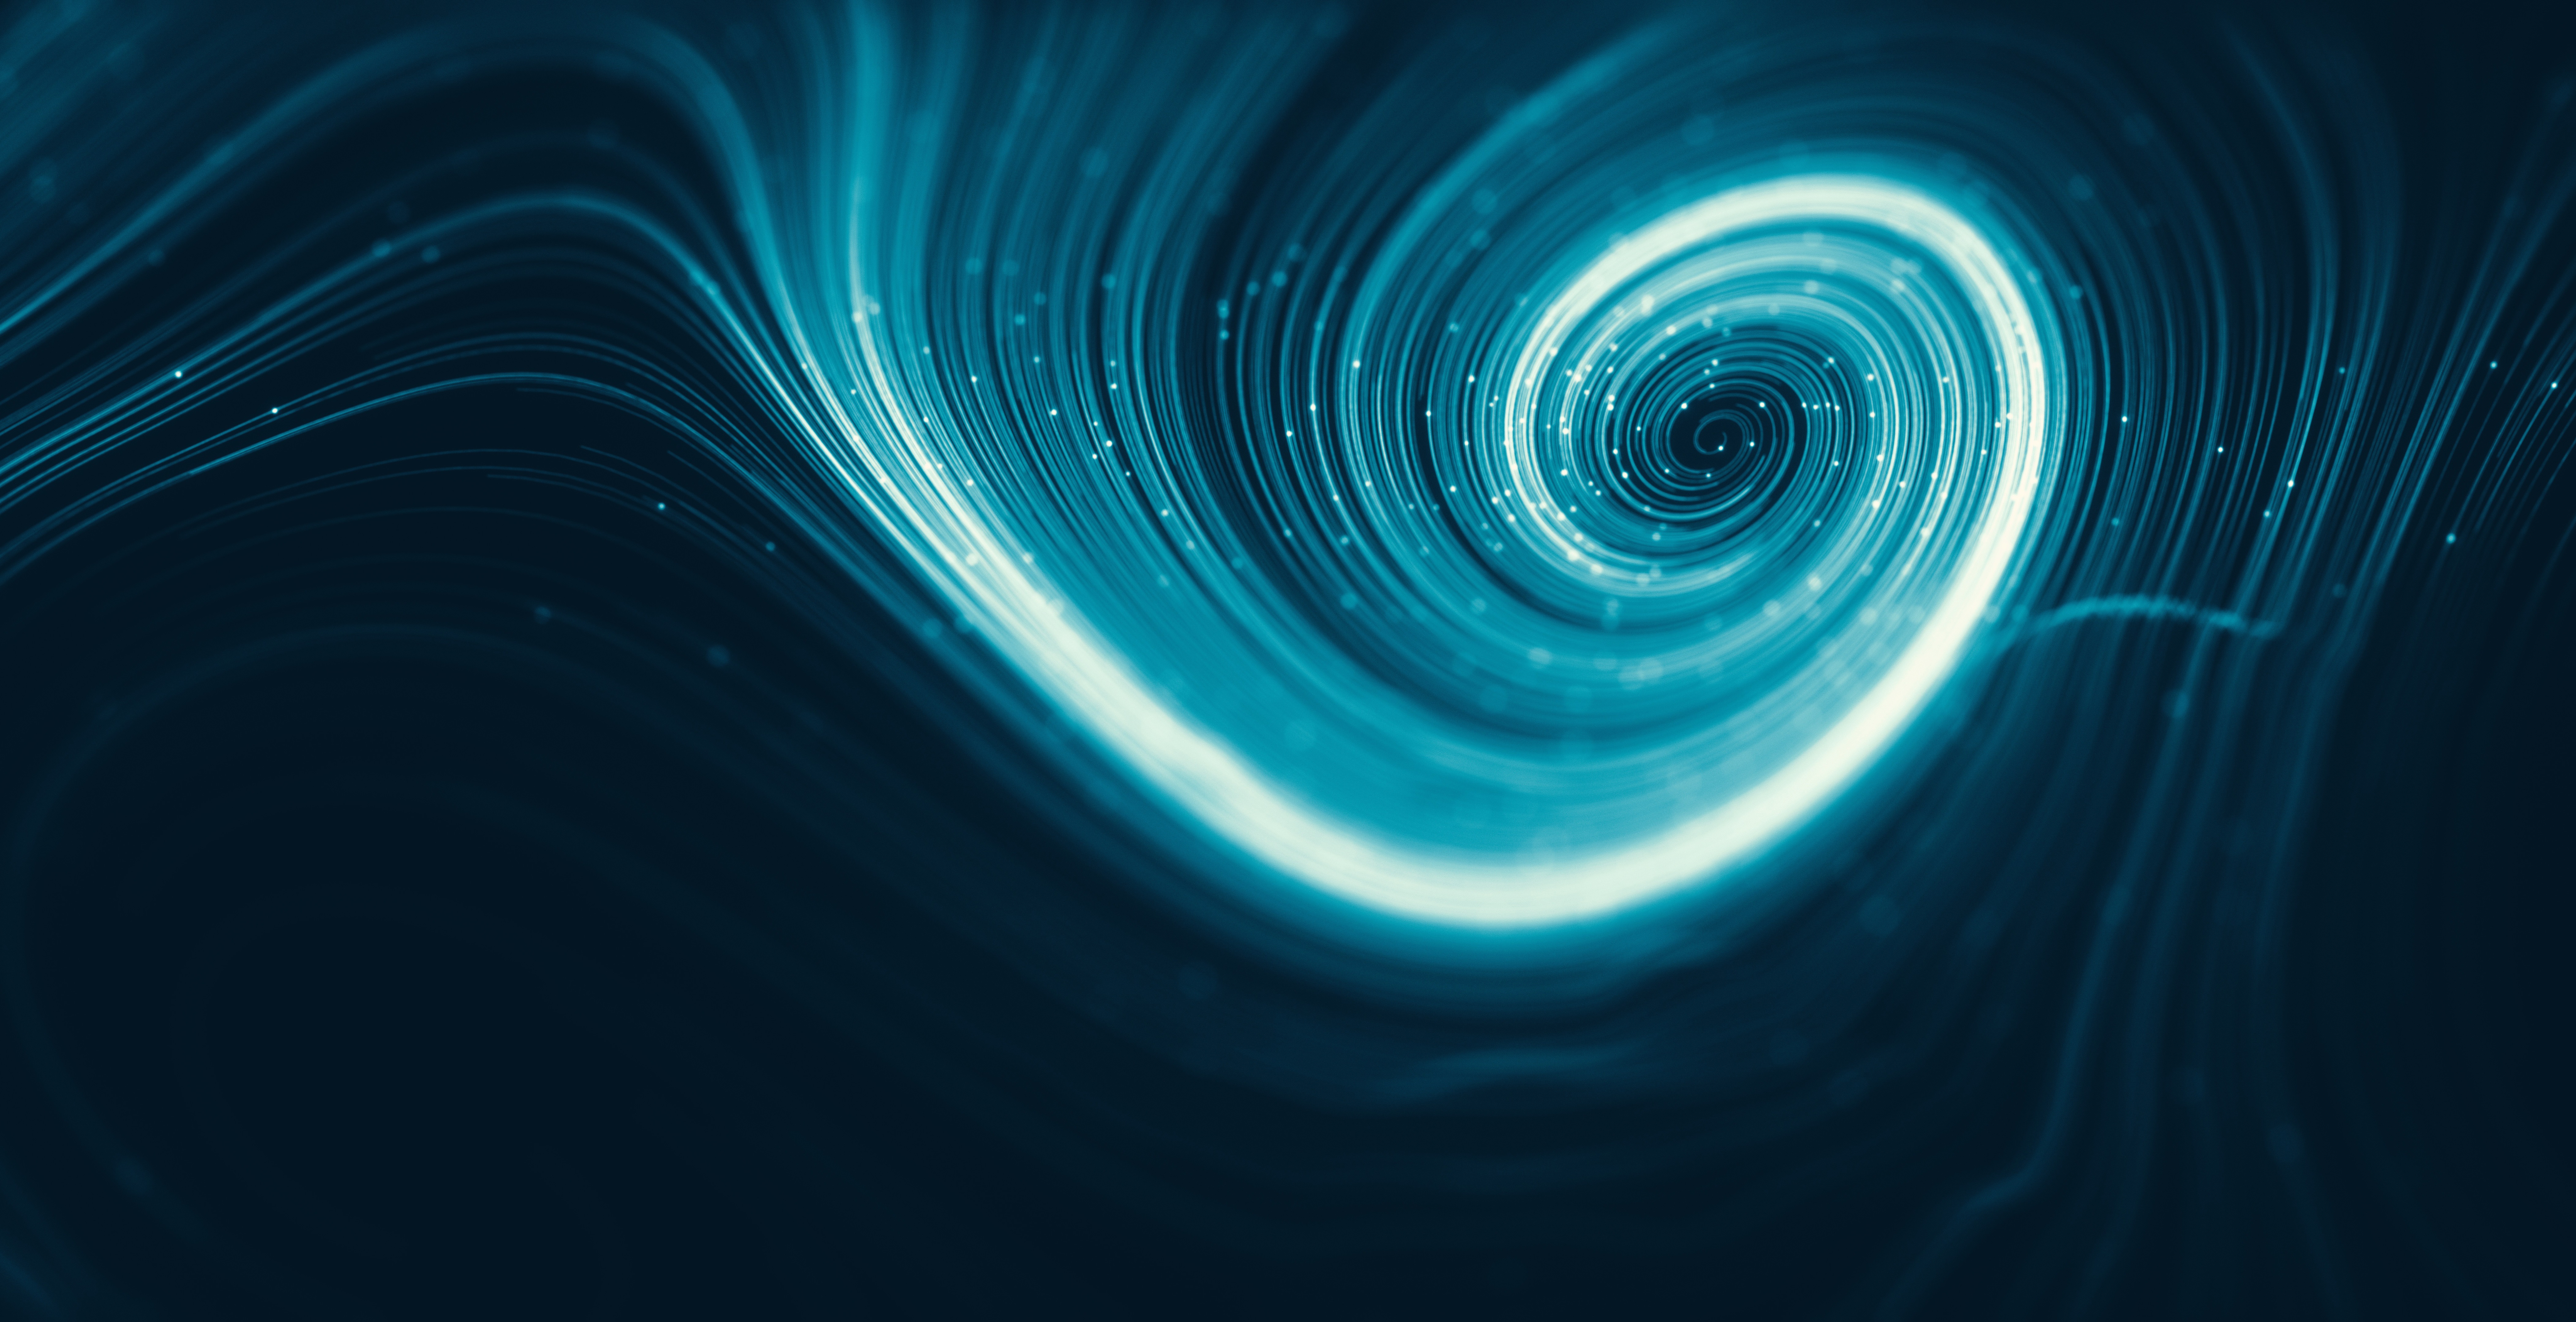 Abstract Waves Vortex Digital Art Artwork Particle Blue Glowing Shiny Twist Neon Liquid Swirls 8415x4320